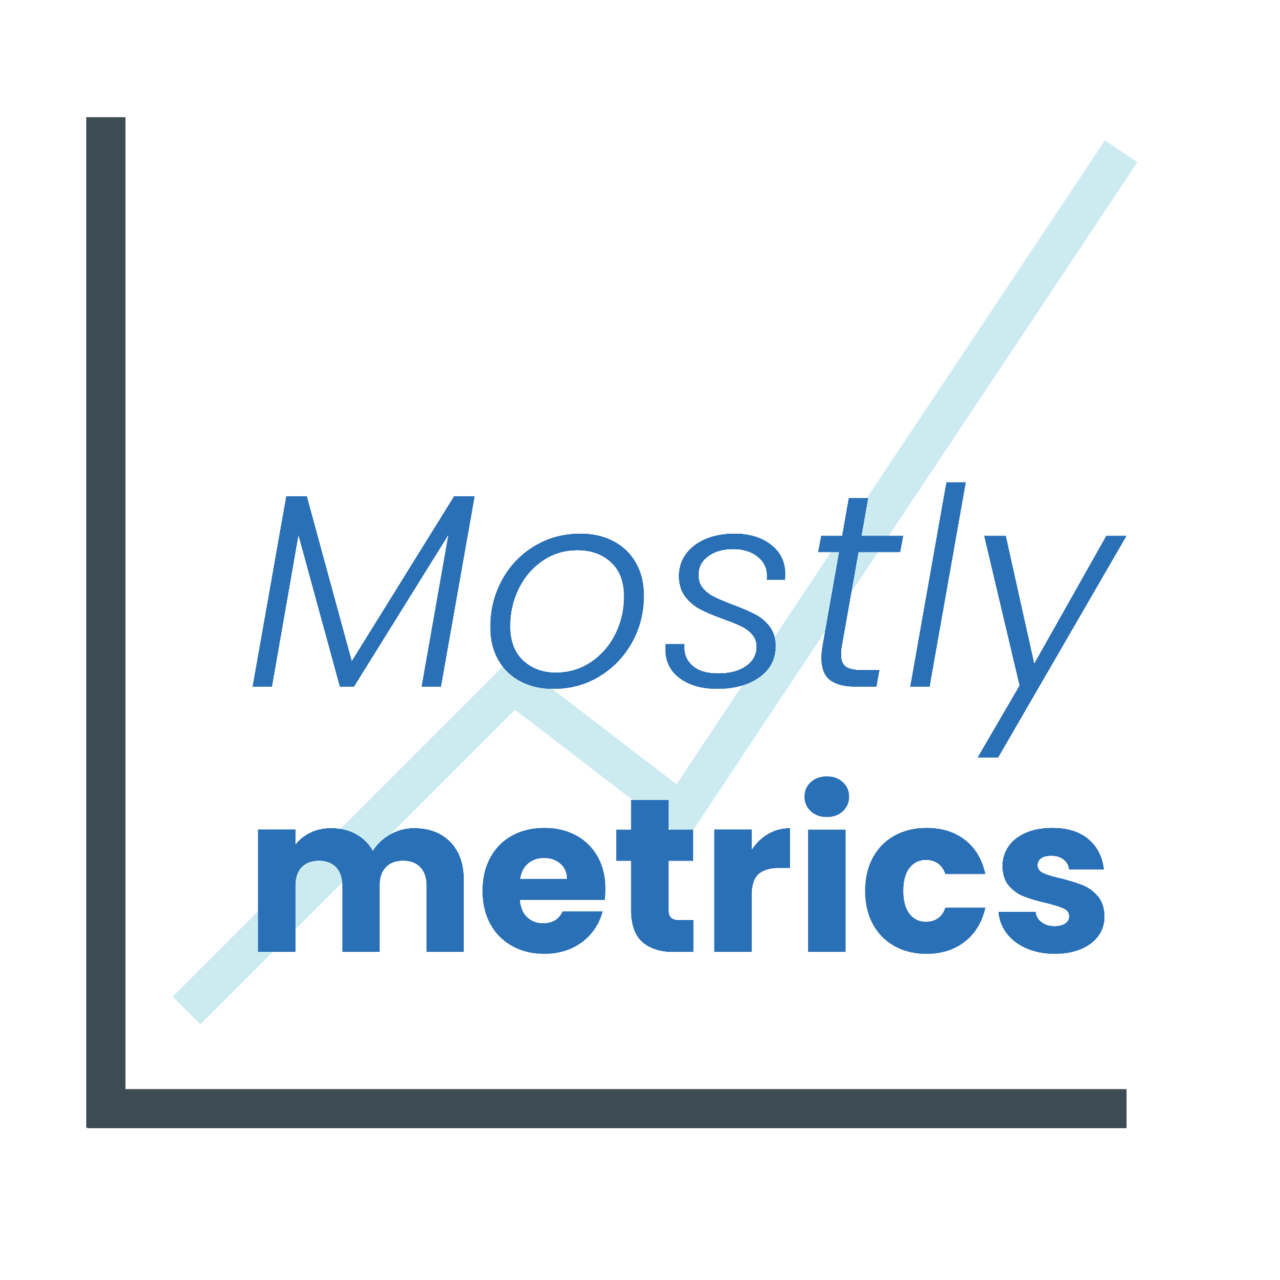 Artwork for Mostly metrics